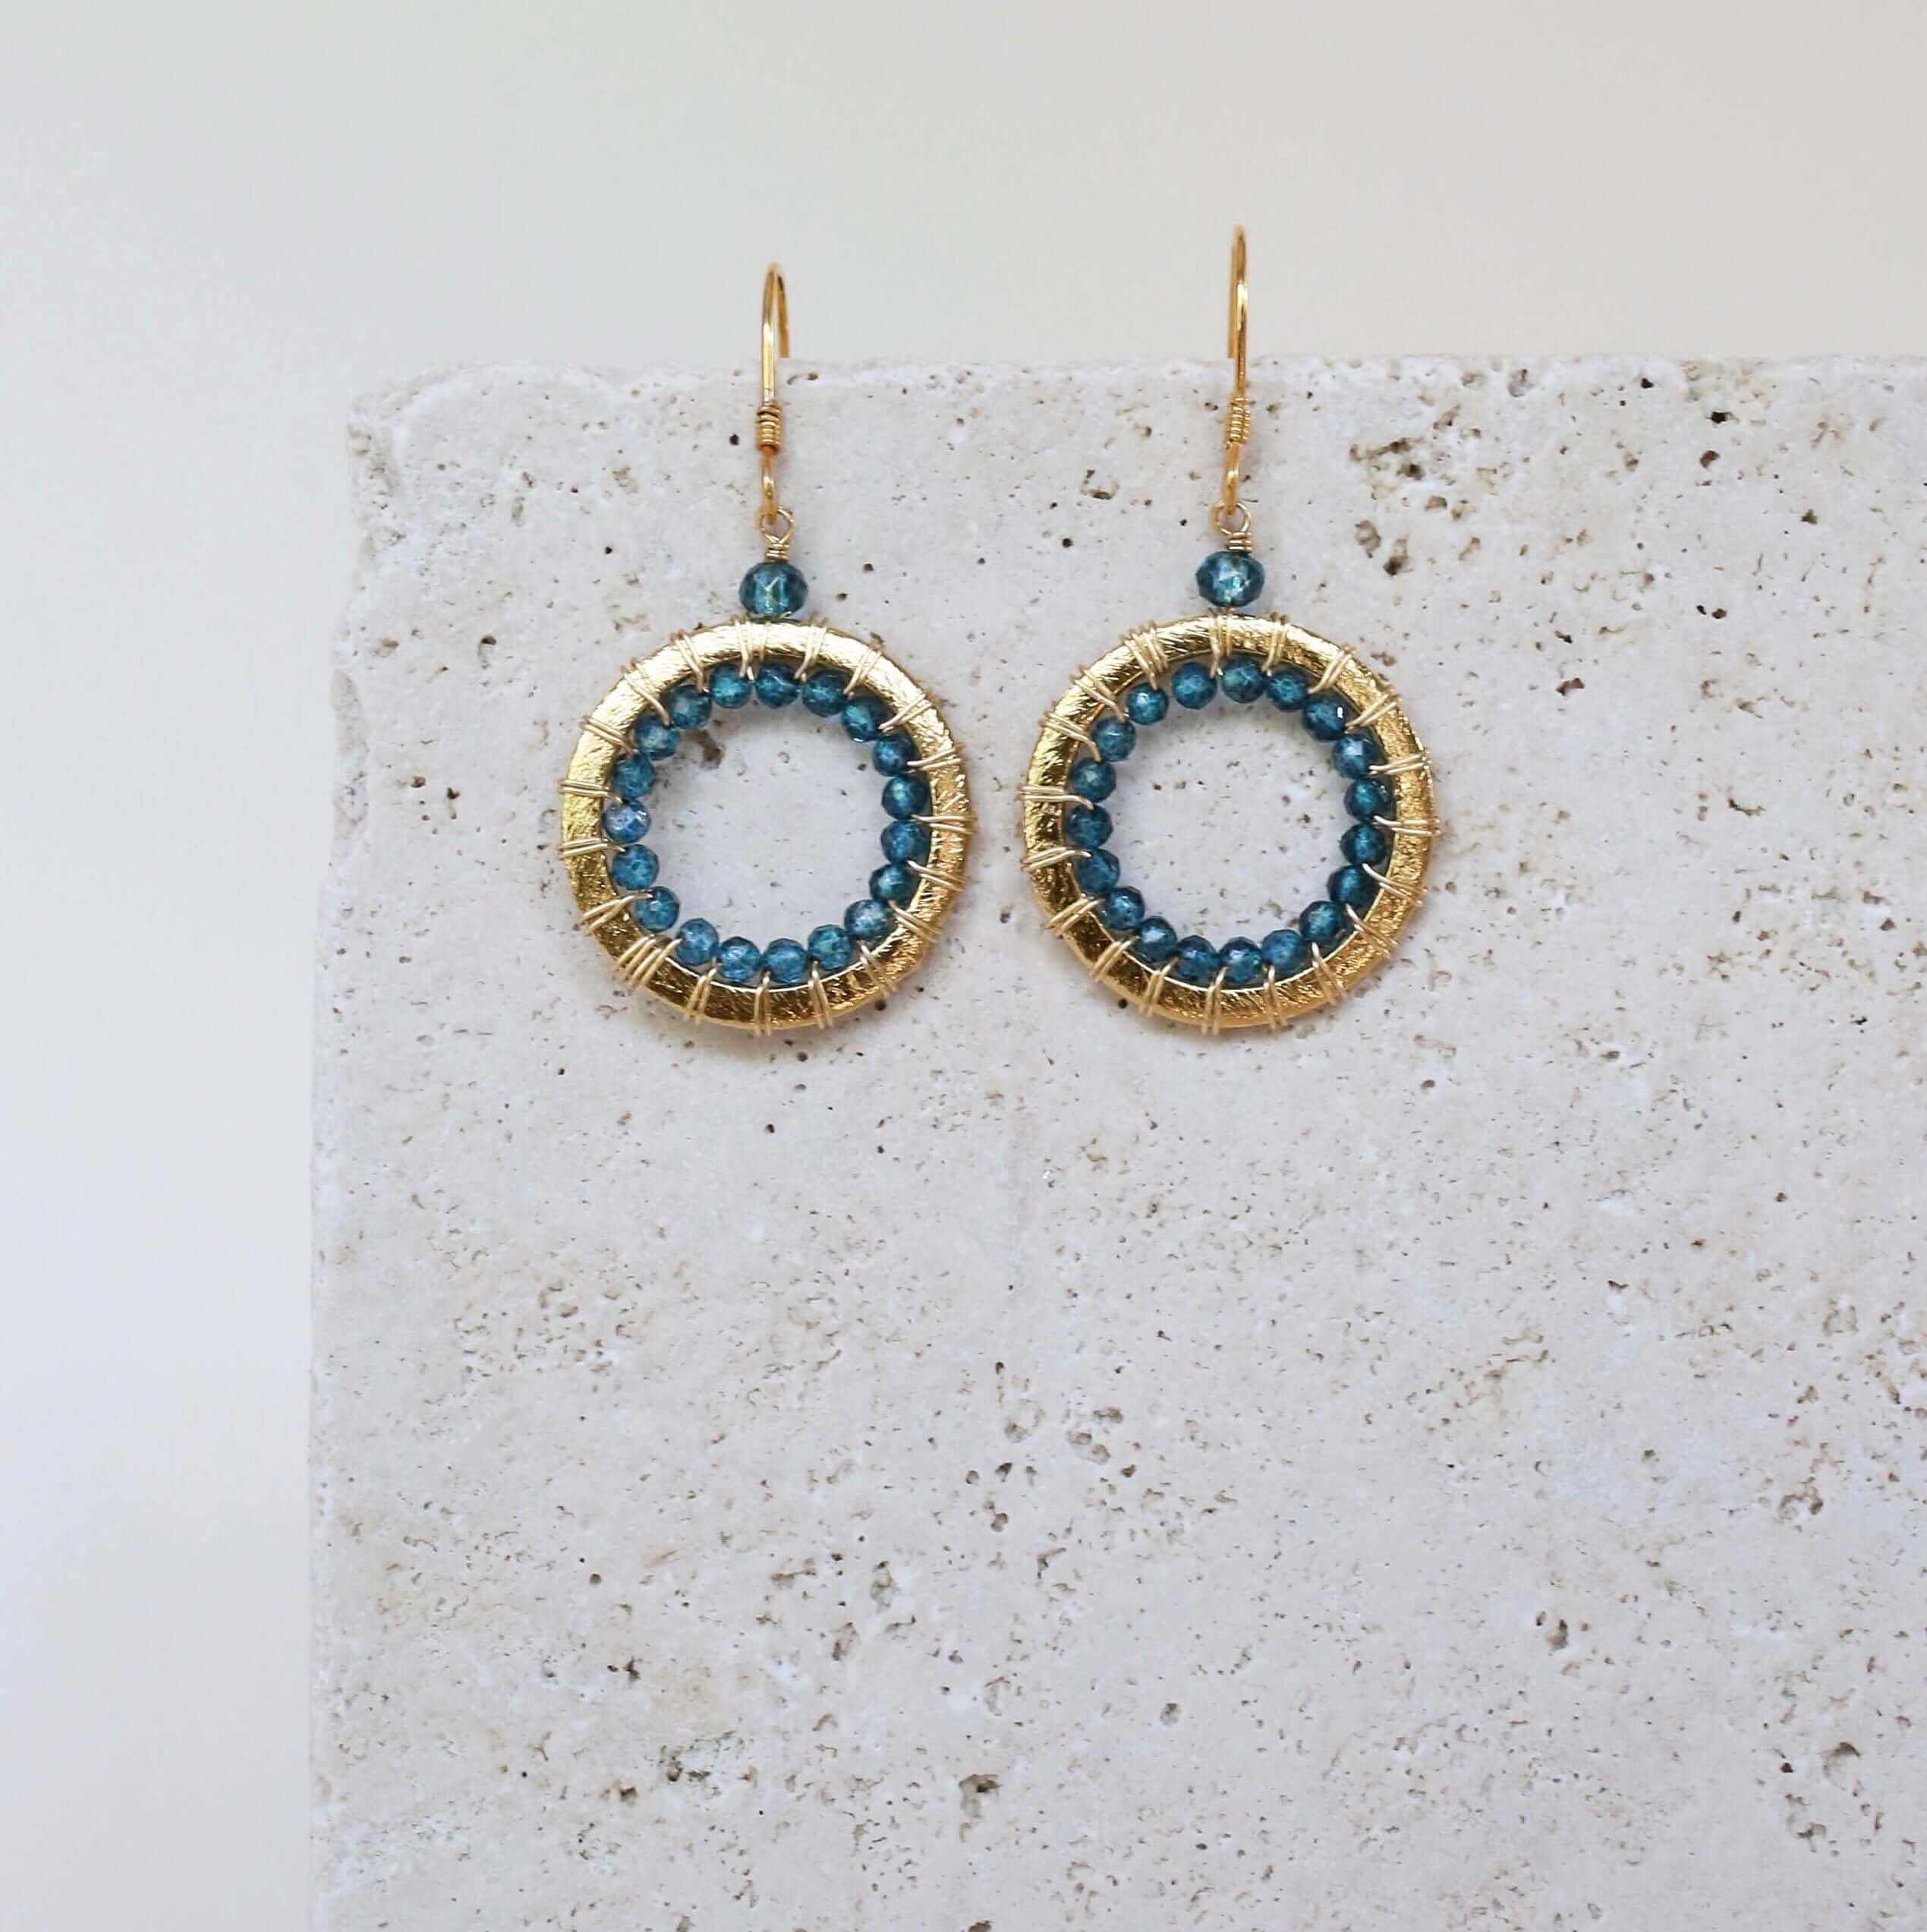 French hook London Blue Quartz dangle earrings